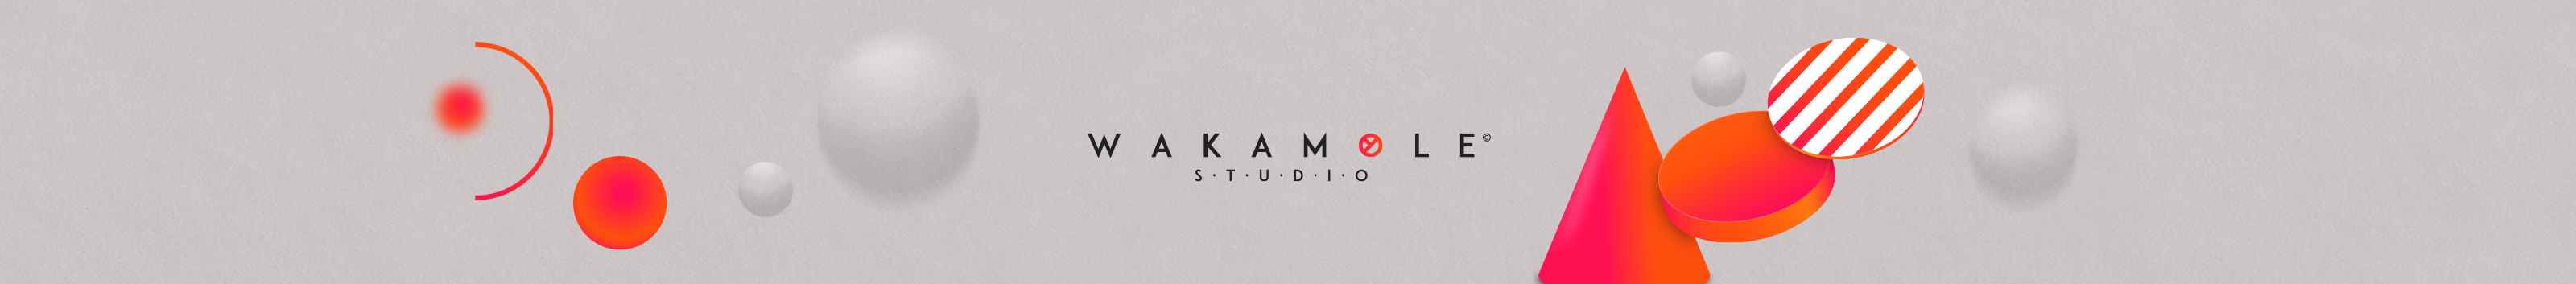 Wakamole Studio's profile banner